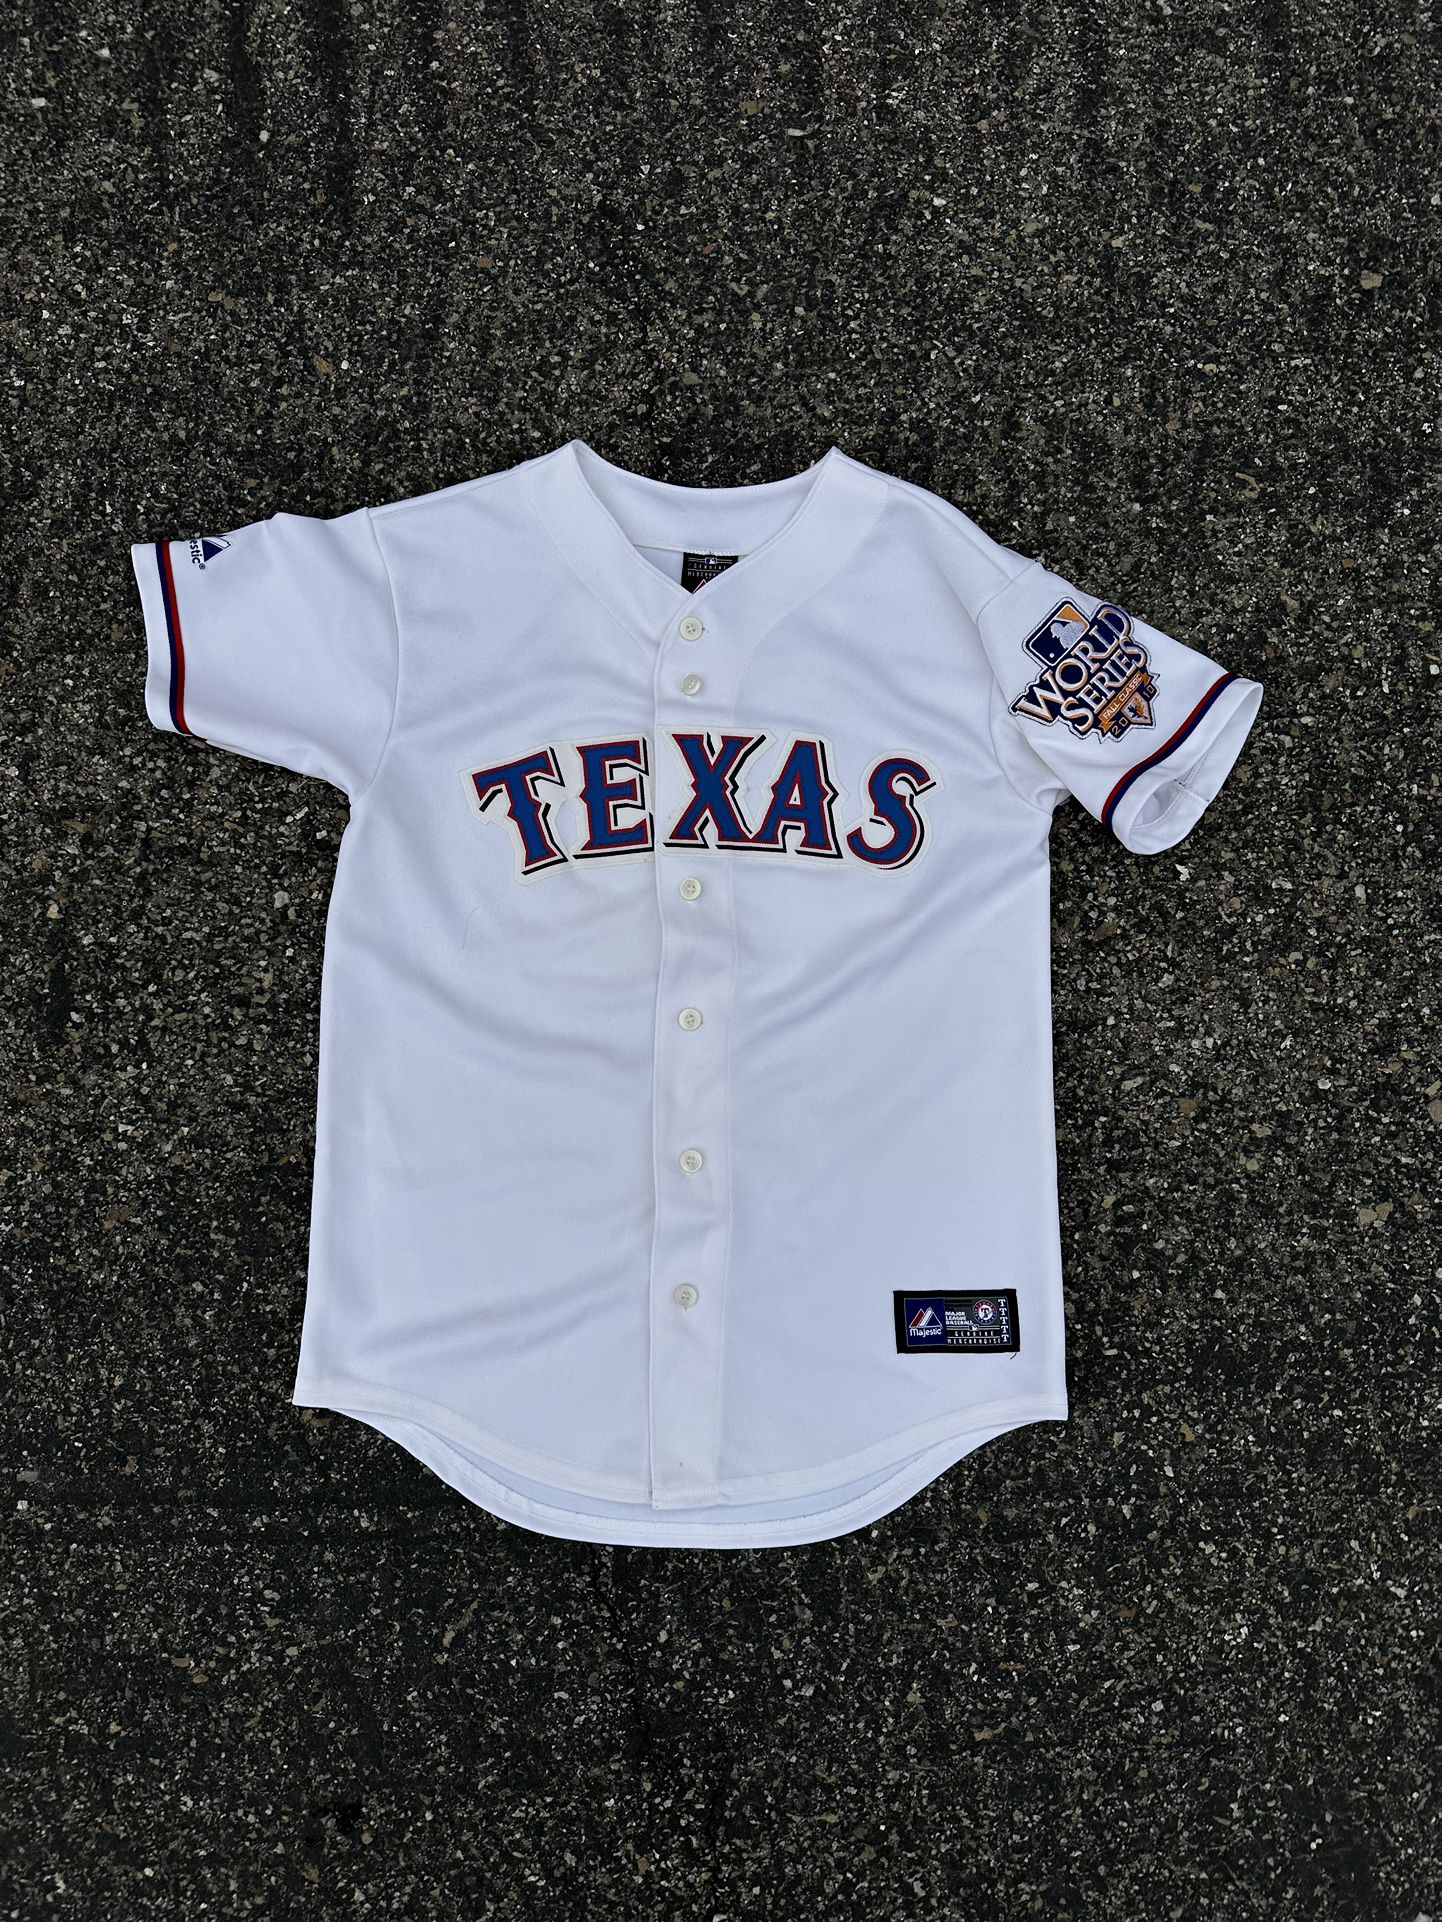 MLB Texas Rangers 2010 World Series Majestic White Jersey Lewis #48 Size L